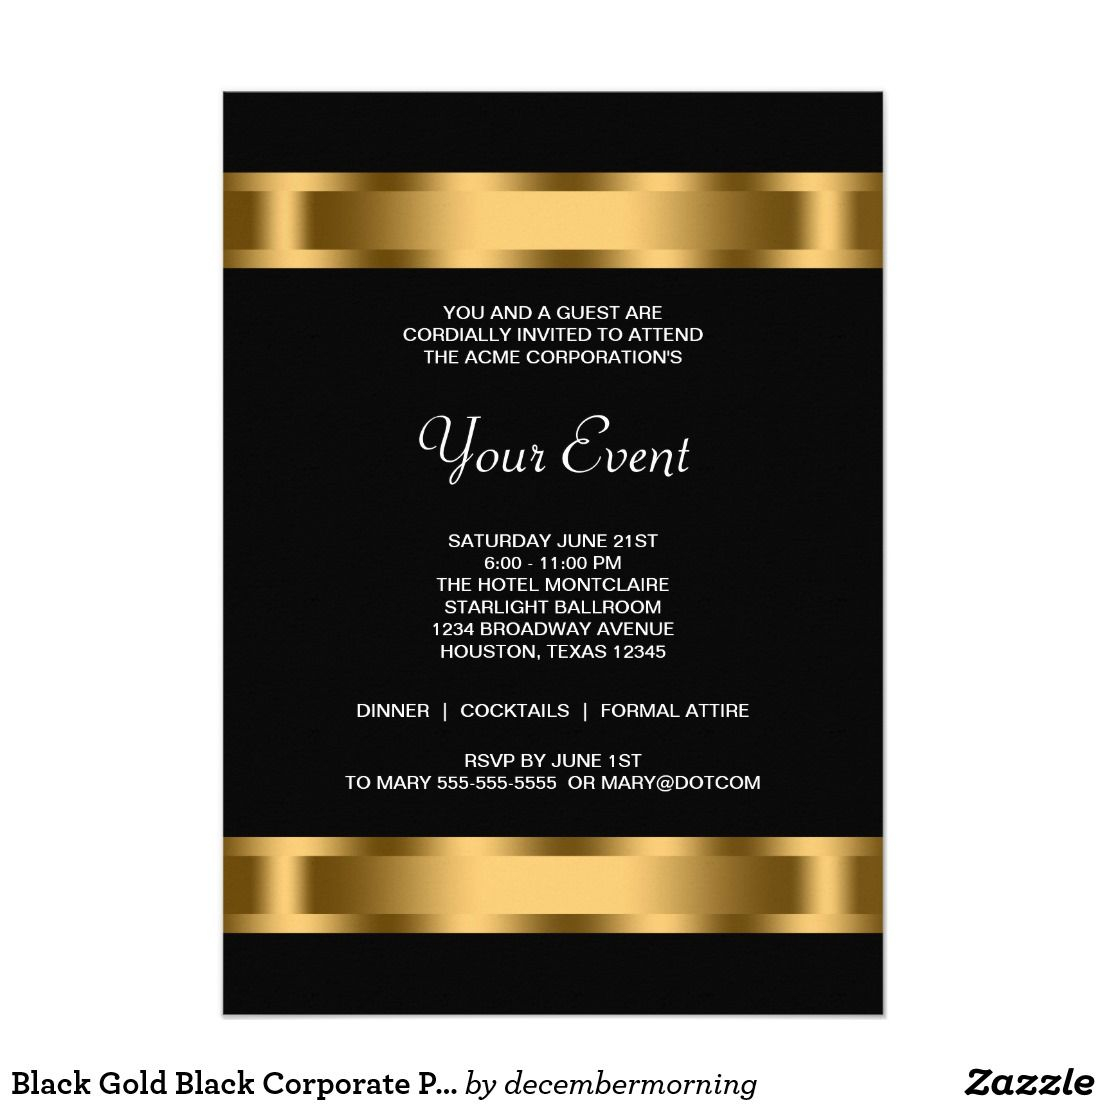 Black Gold Black Corporate Party Event Invitation Zazzle inside proportions 1106 X 1106